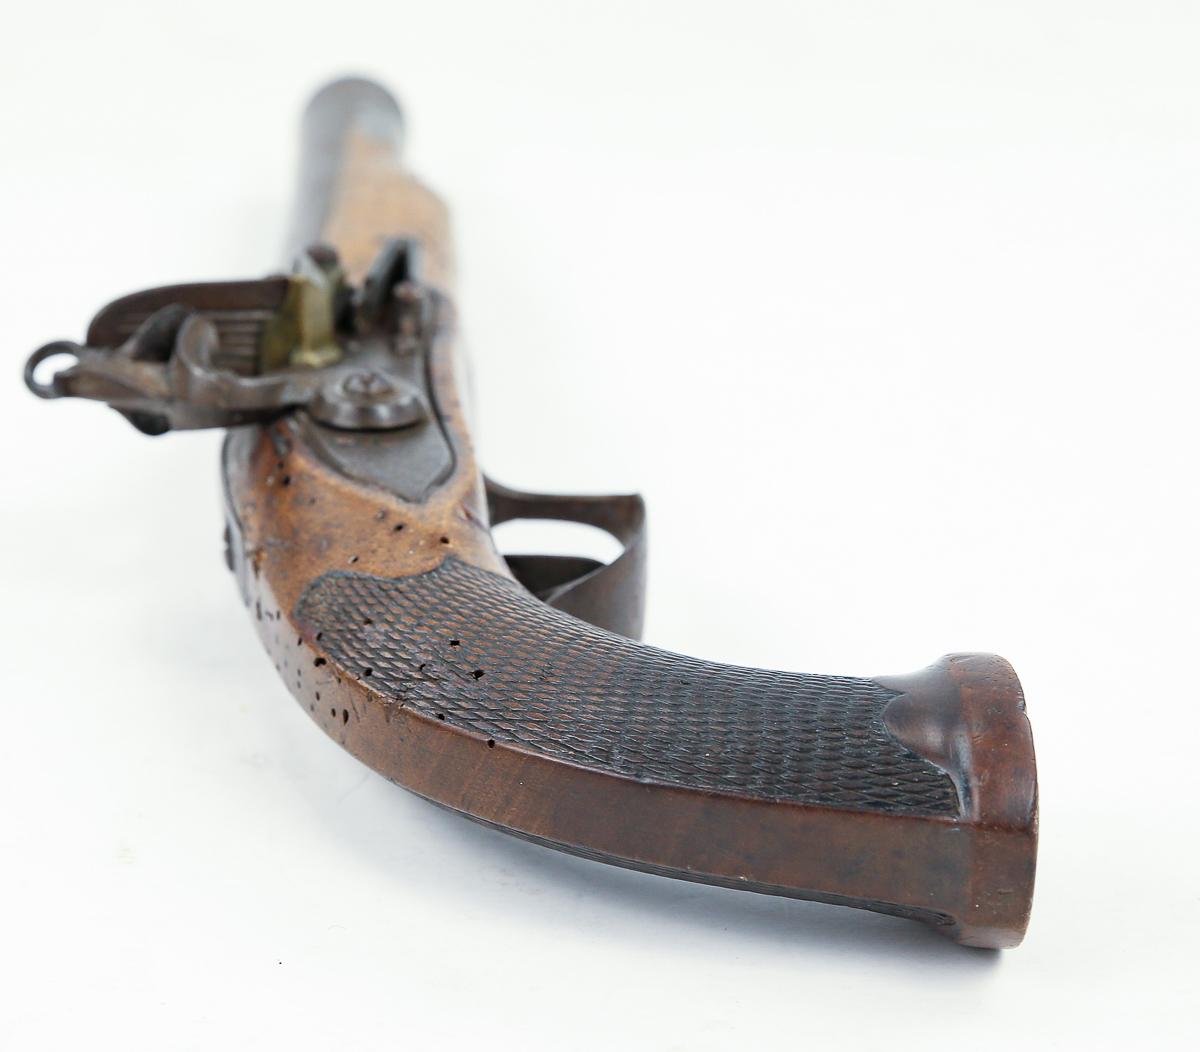 1700s Joseph Deop Spanish Flintlock Pistol (C) nsn